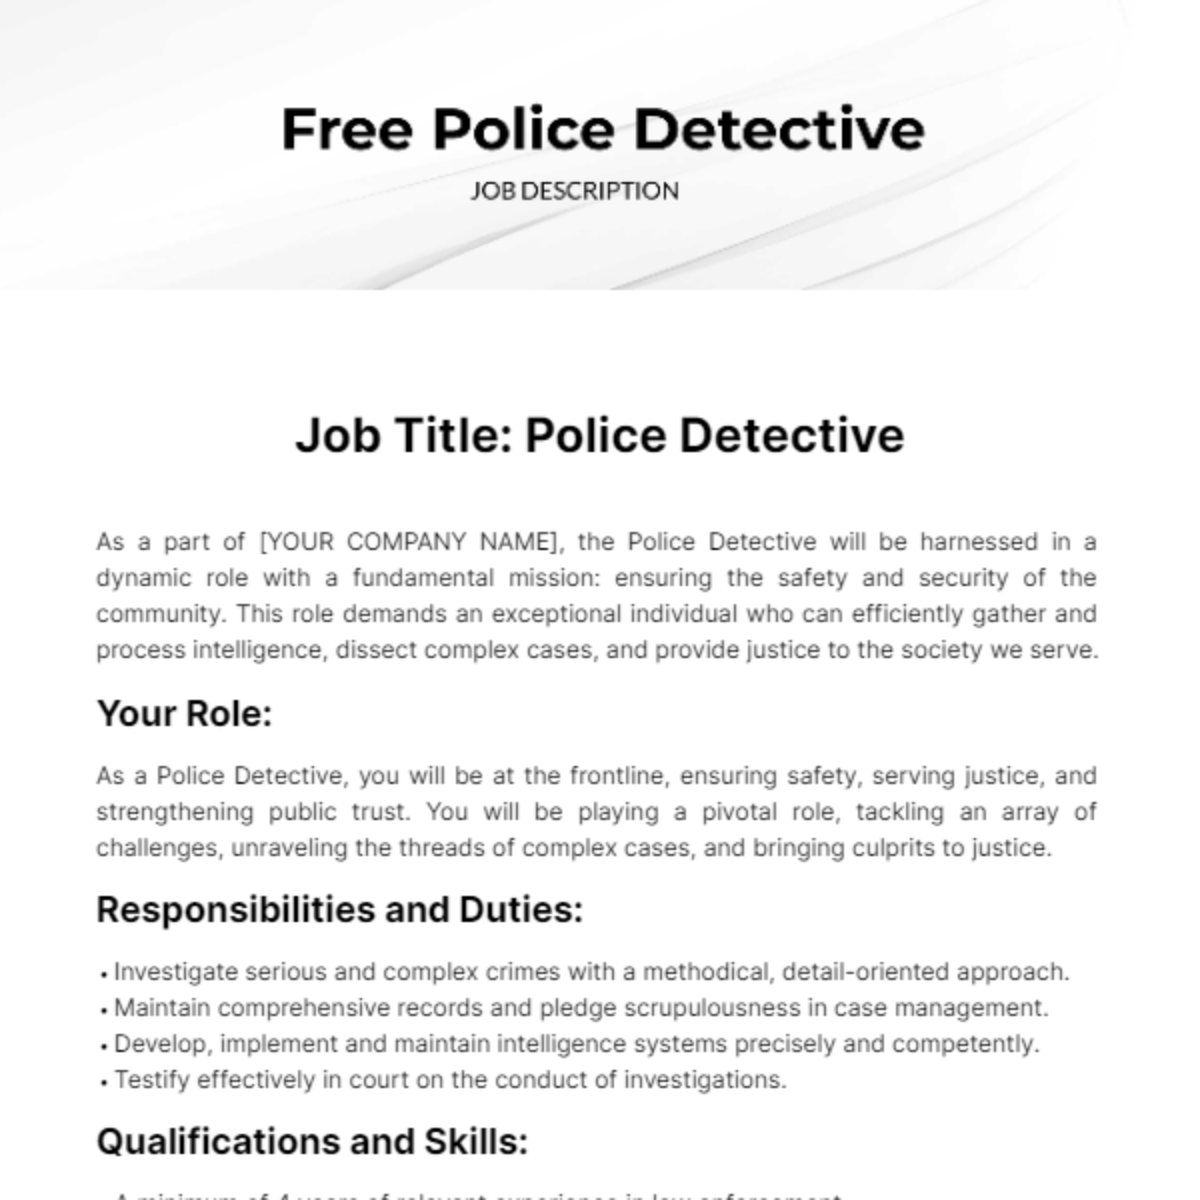 Police Detective Job Description Template